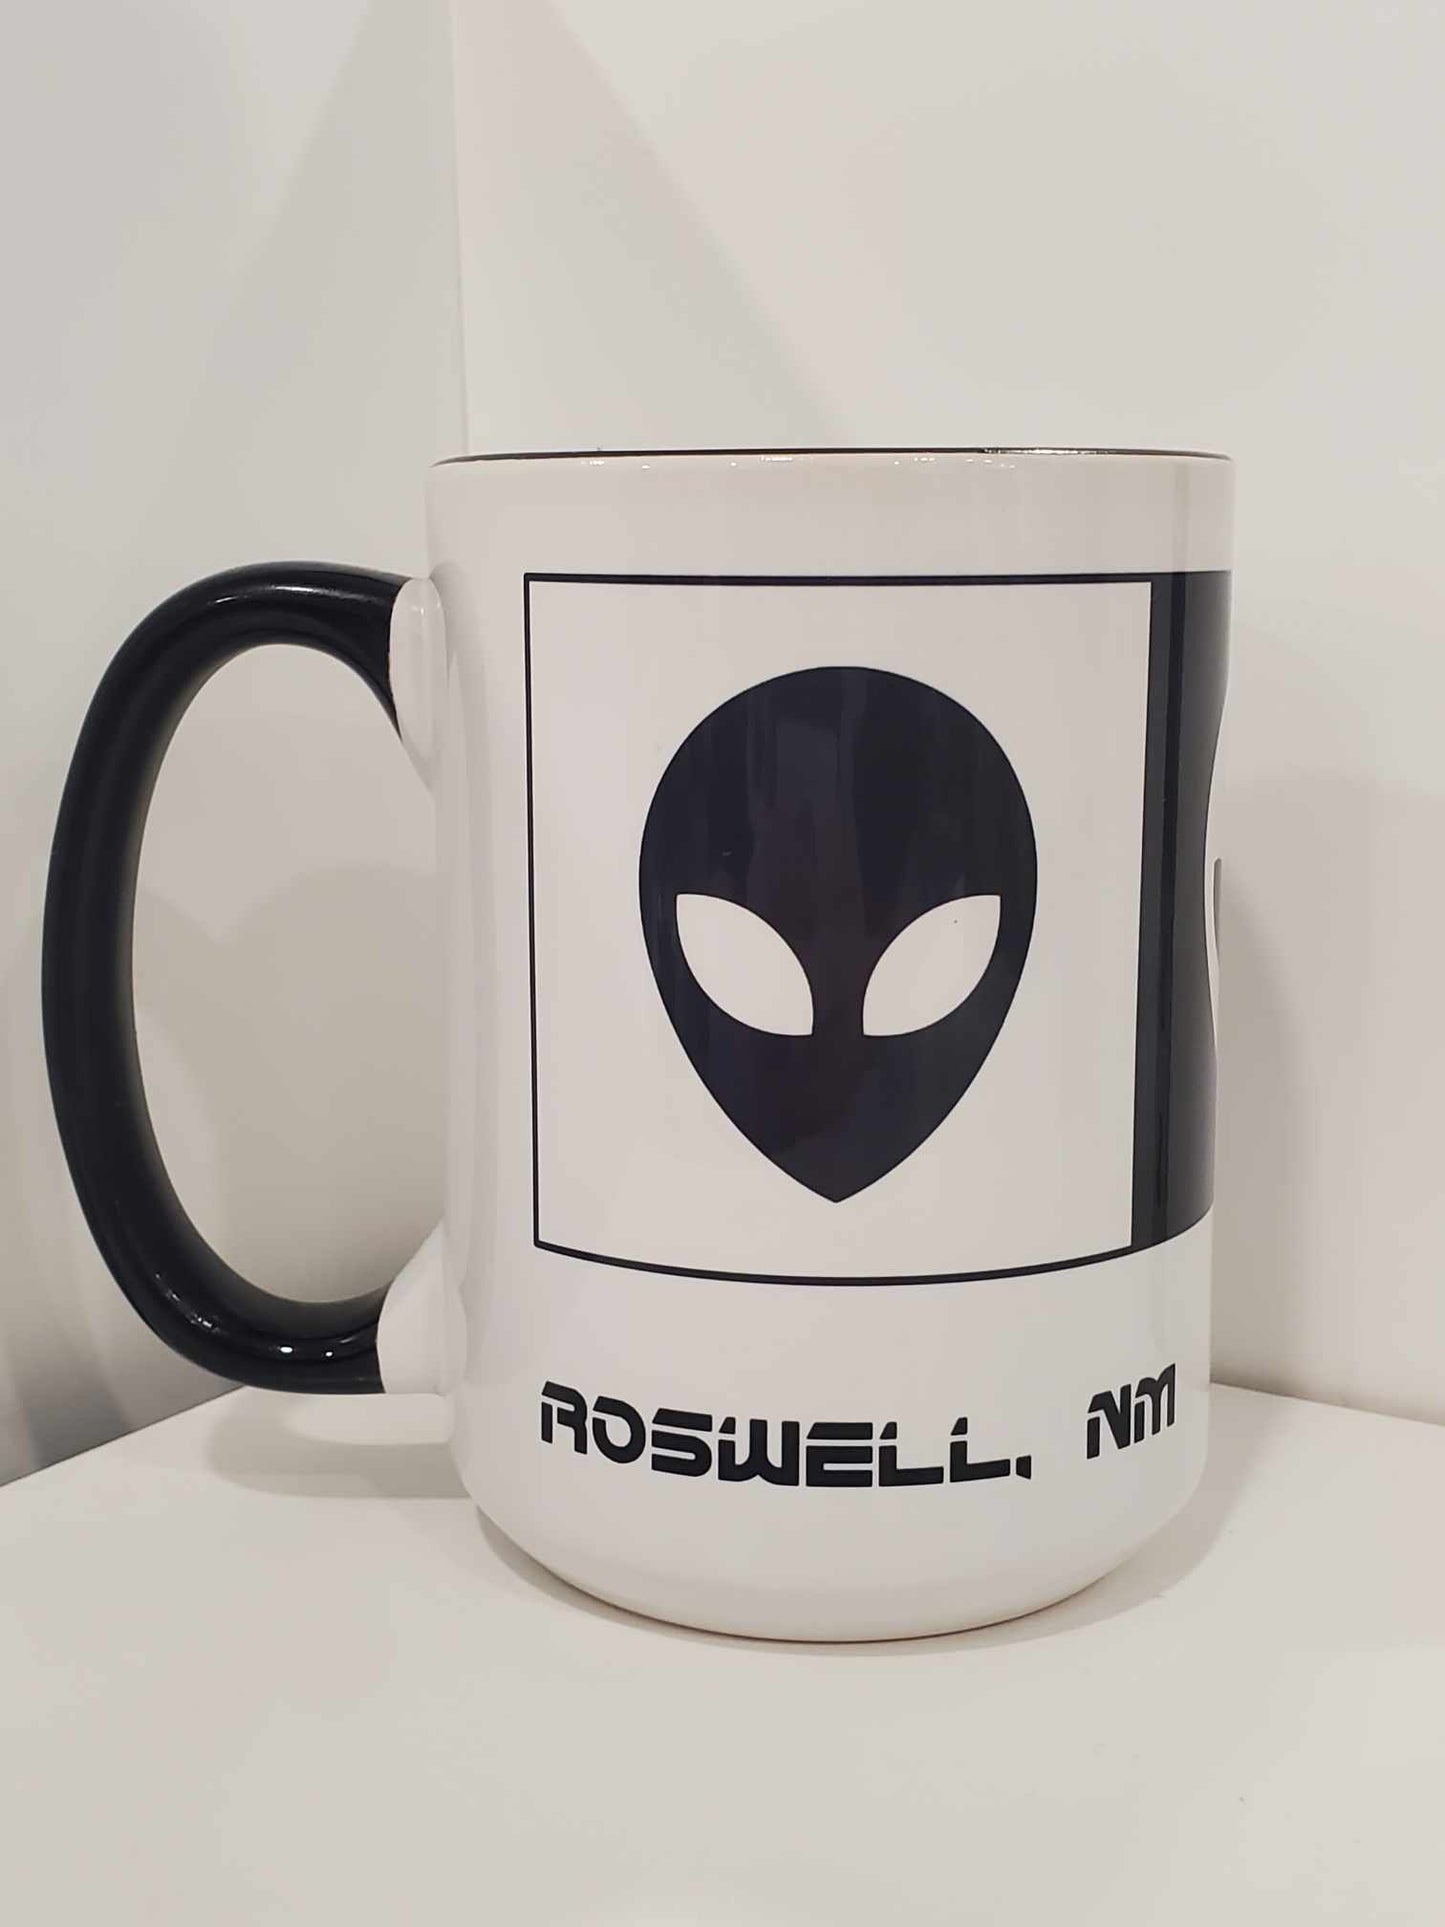 Tri-Alien Roswell, NM 15oz Coffee Mug Black